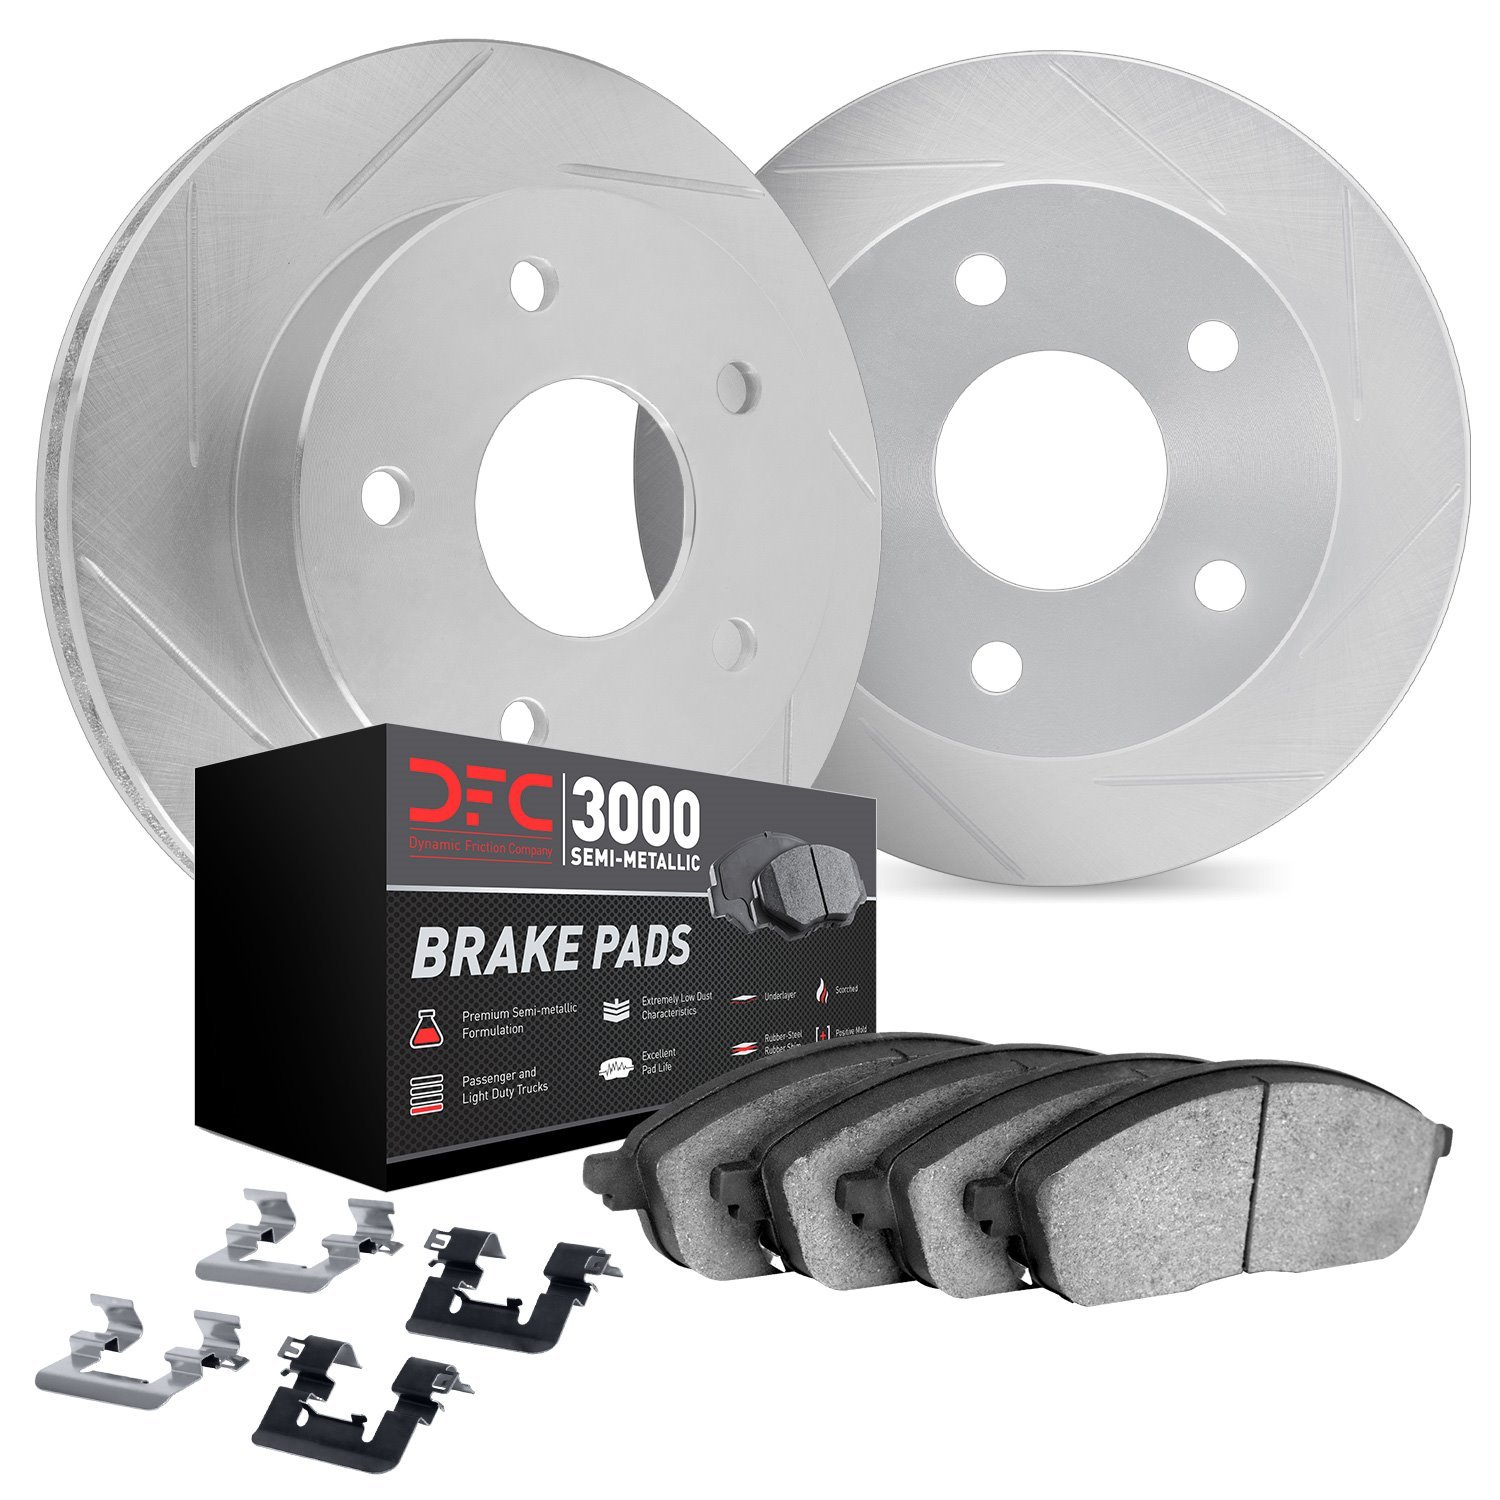 5112-58024 Slotted Brake Rotors with 3000-Series Semi-Metallic Brake Pads Kit & Hardware [Silver], Fits Select Acura/Honda, Posi